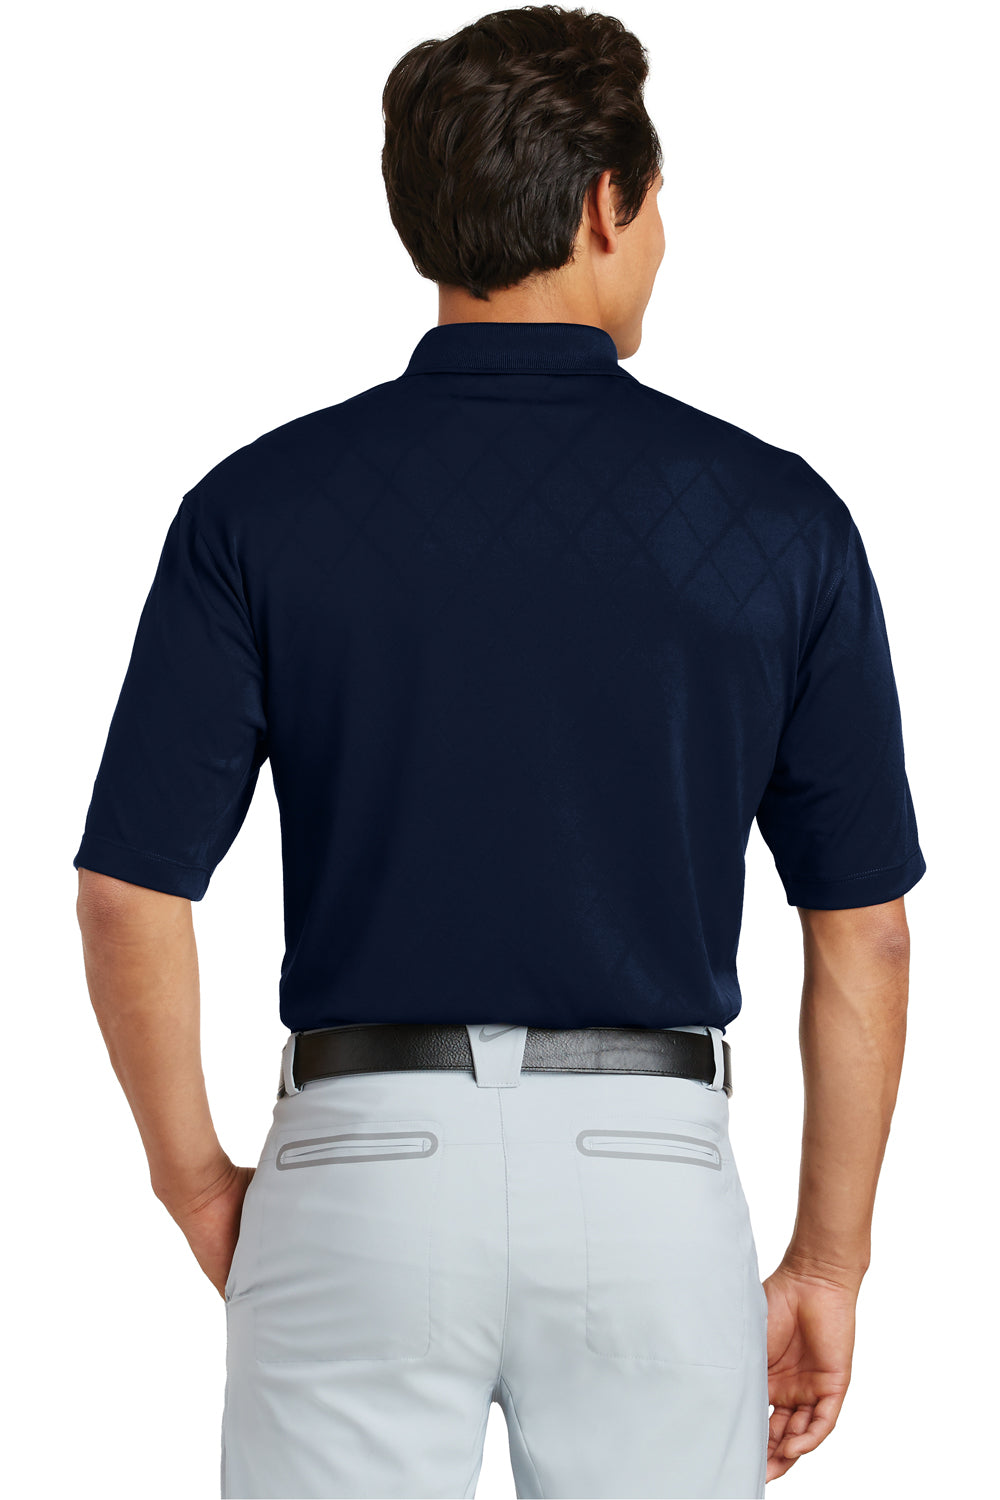 Nike 349899 Mens Dri-Fit Moisture Wicking Short Sleeve Polo Shirt Navy Blue Back